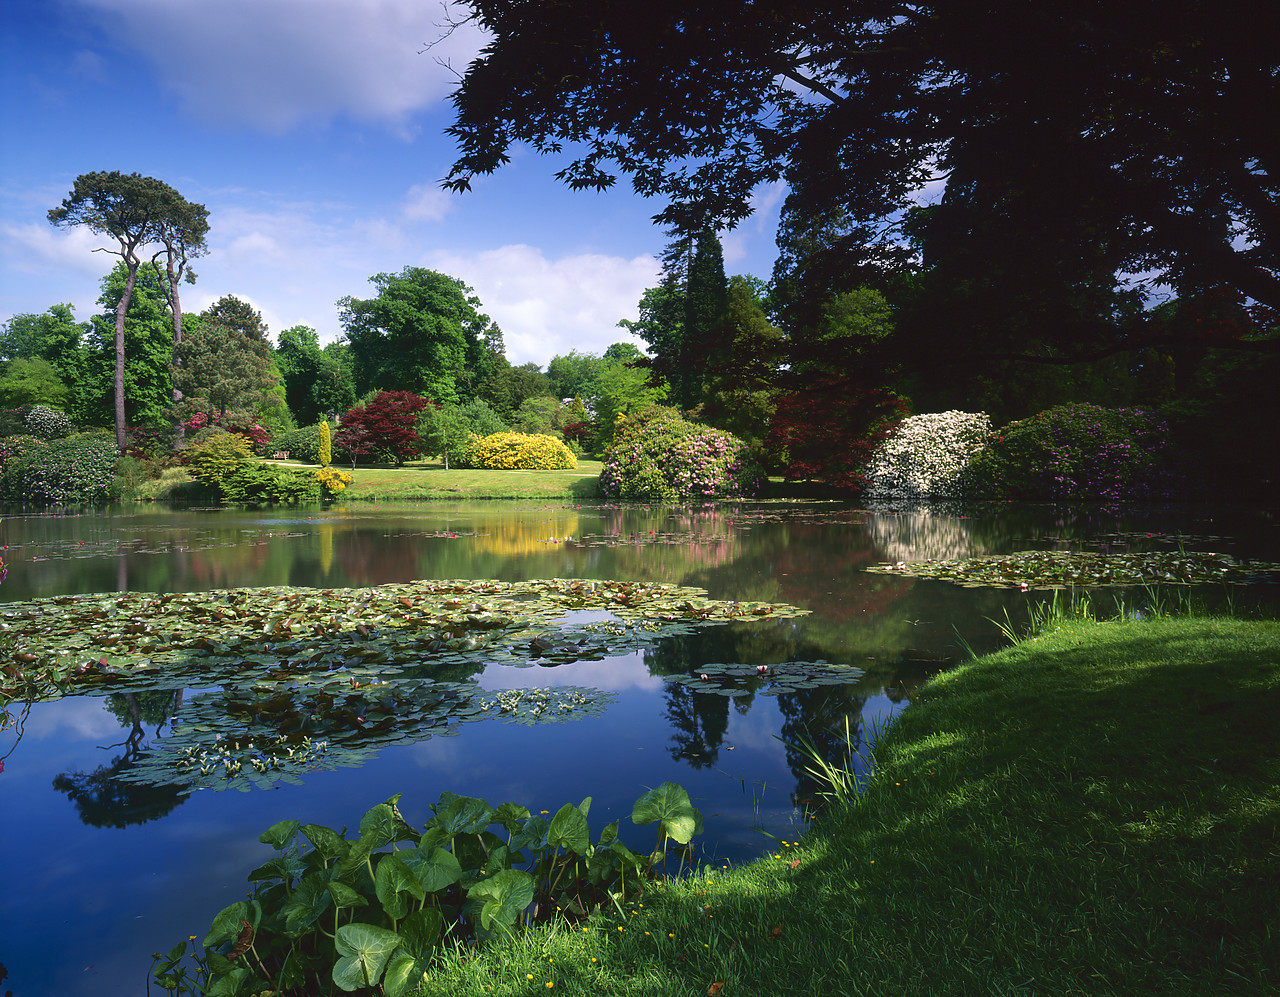 #980686-3 - Sheffield Park Gardens, Uckfield, East Sussex, England